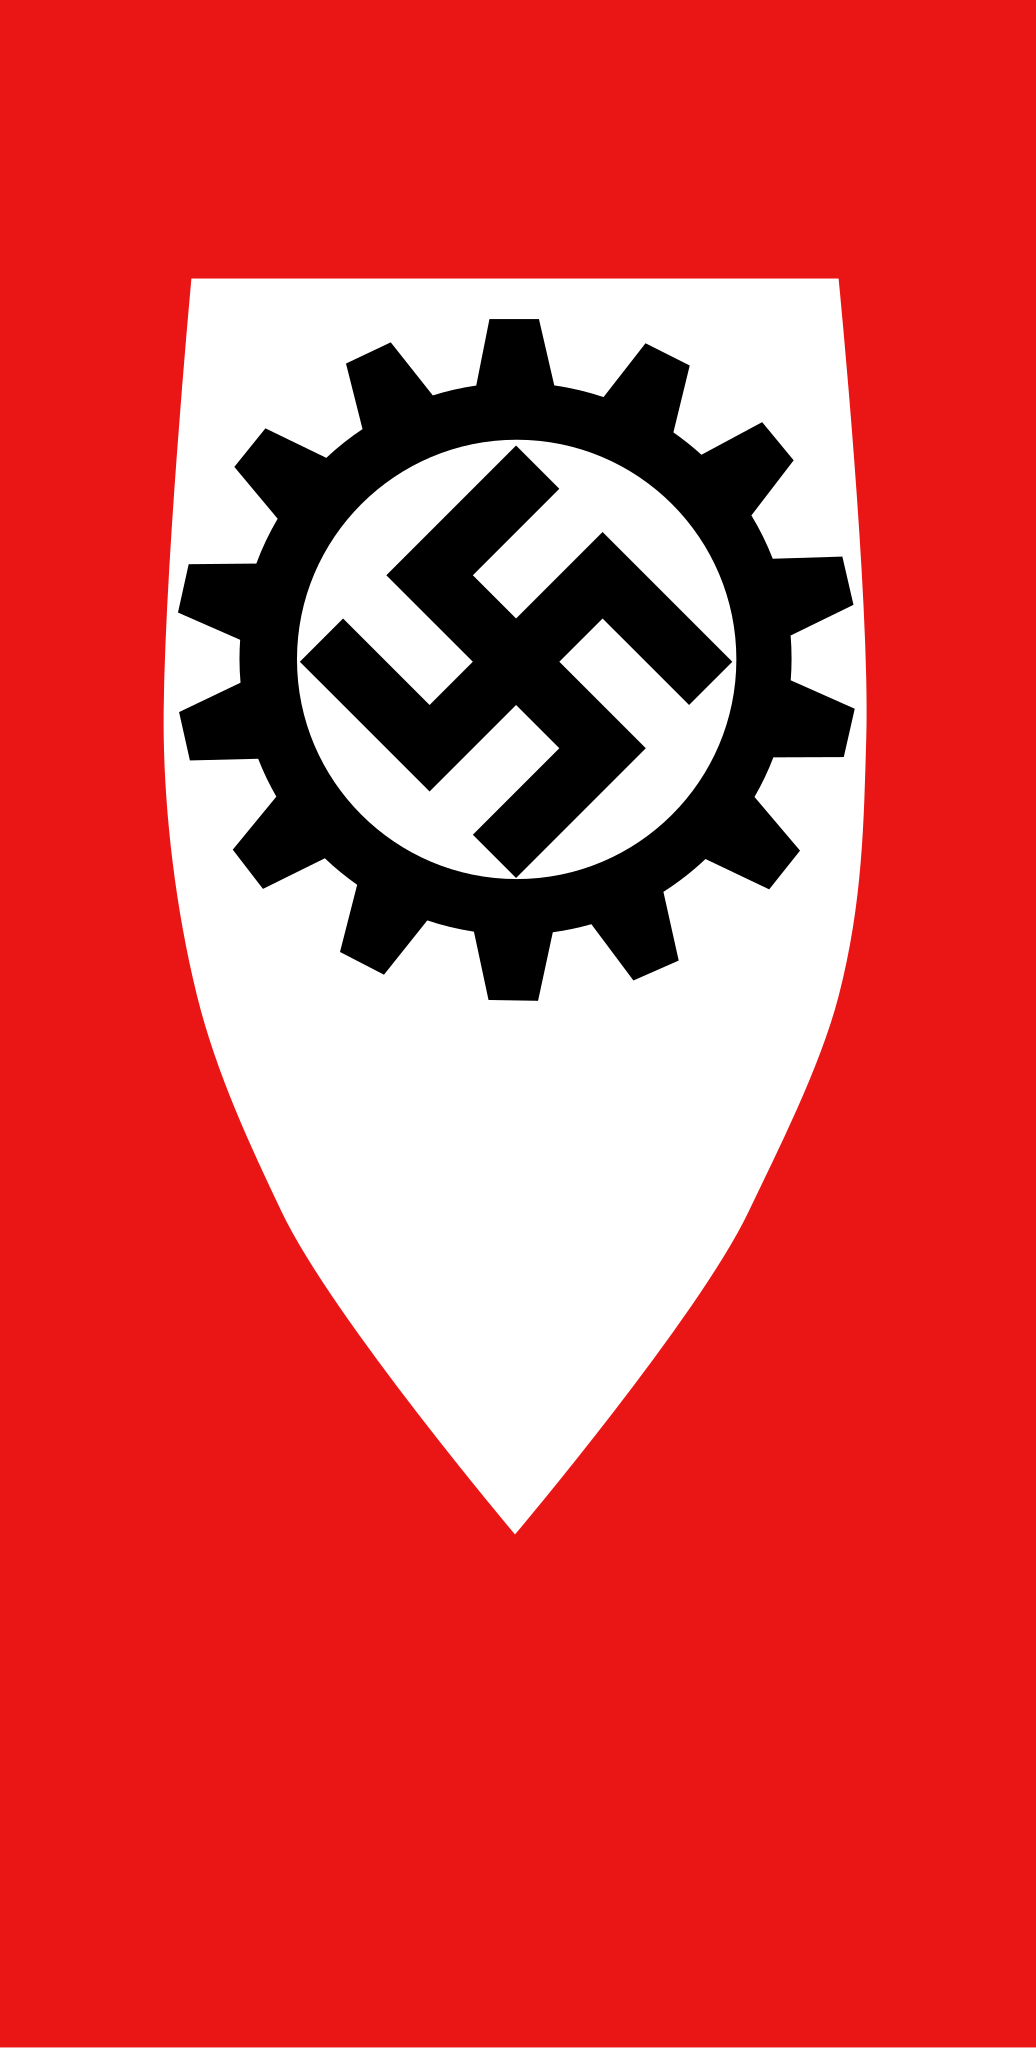 DAF Unit Flag (Deutsche Arbeitsfront Fahne) - Flags & Banners